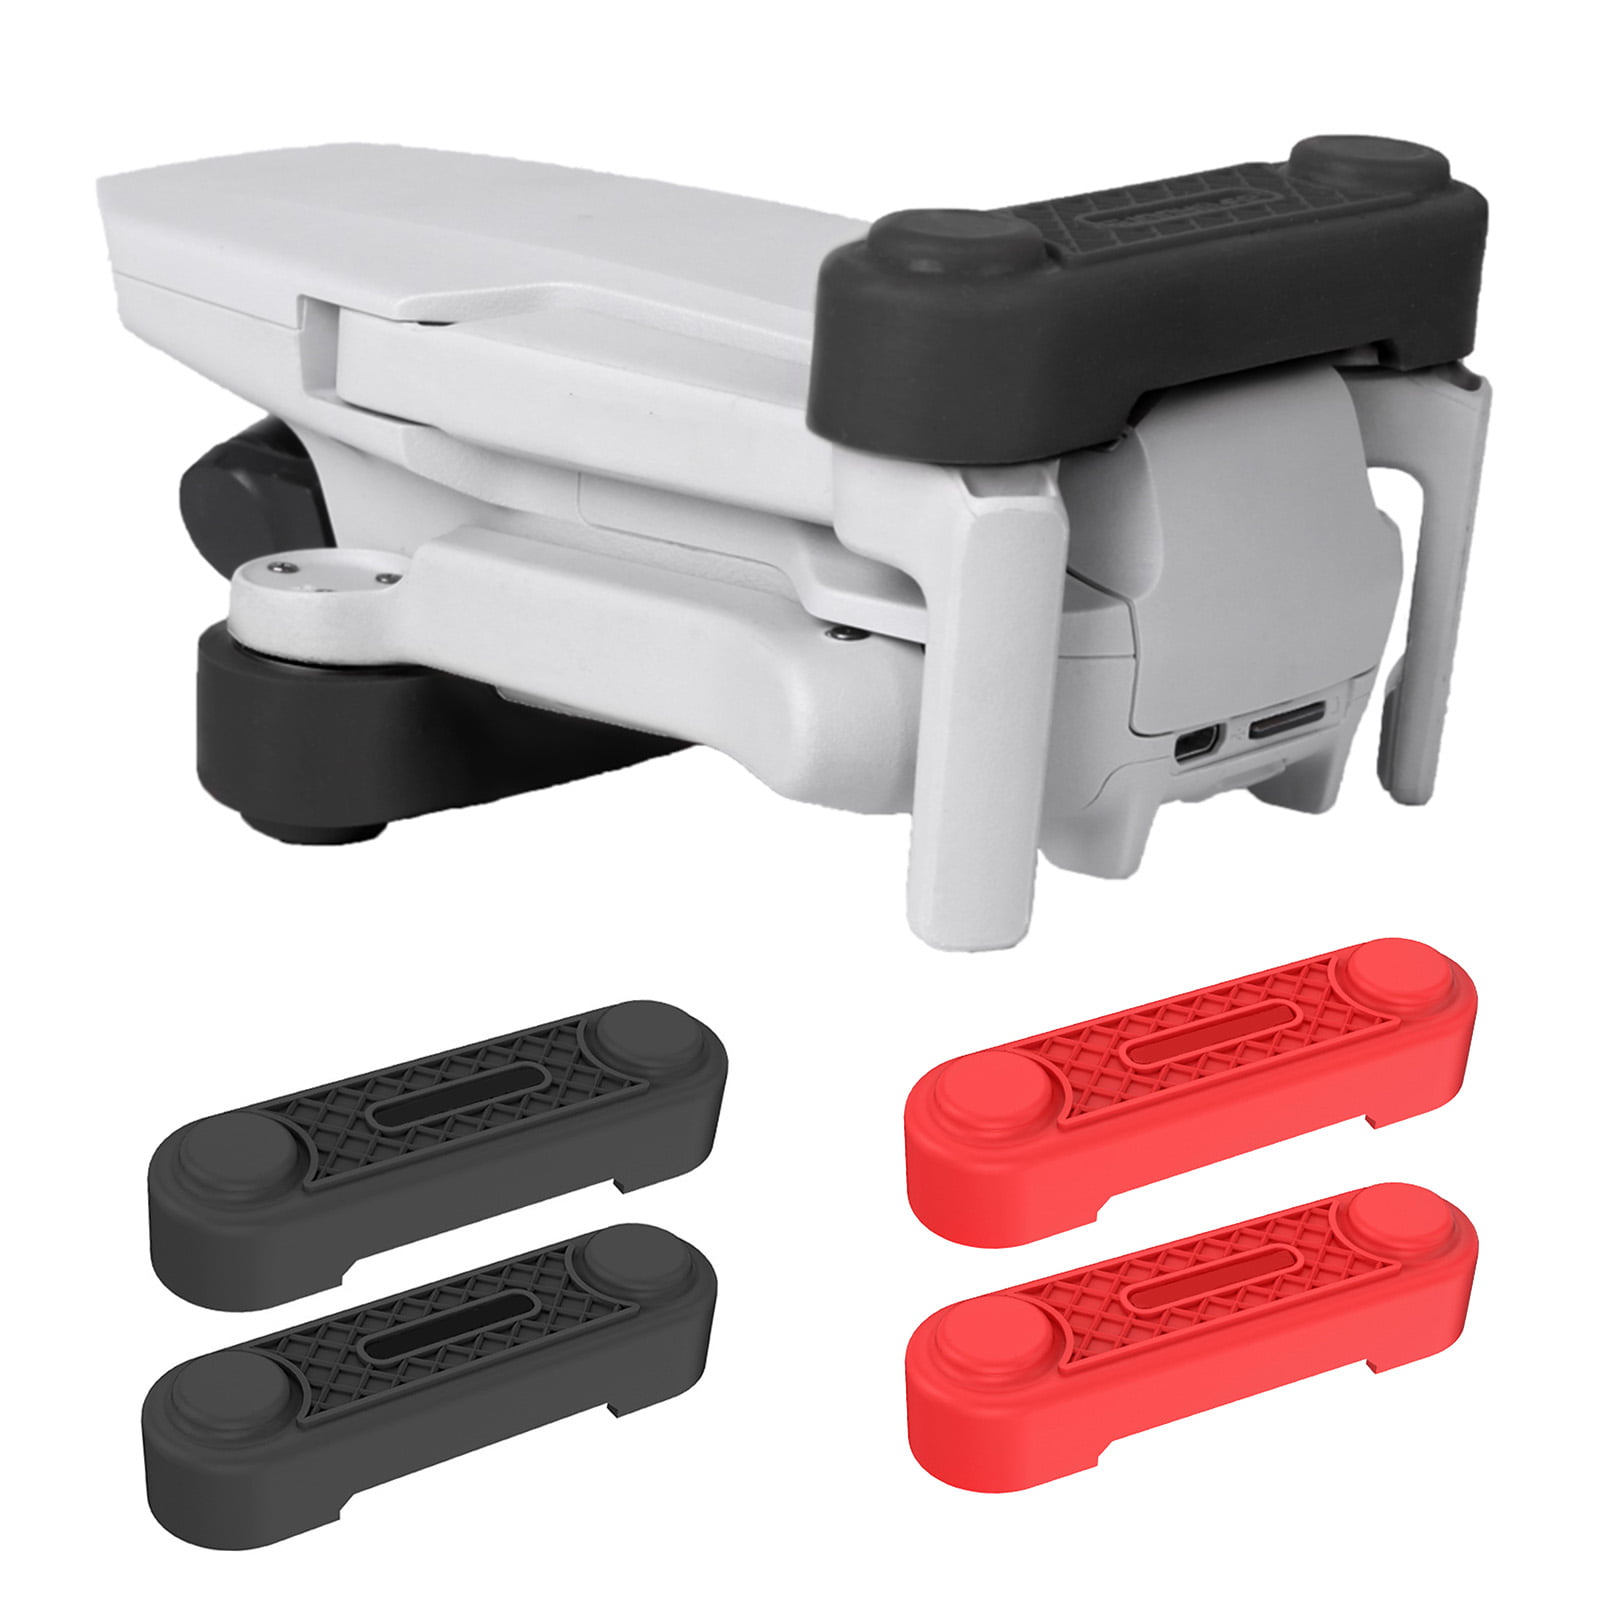 Soft Silicone Propeller Protective Fixed Holder For DJI Mavic Mini RC Drone